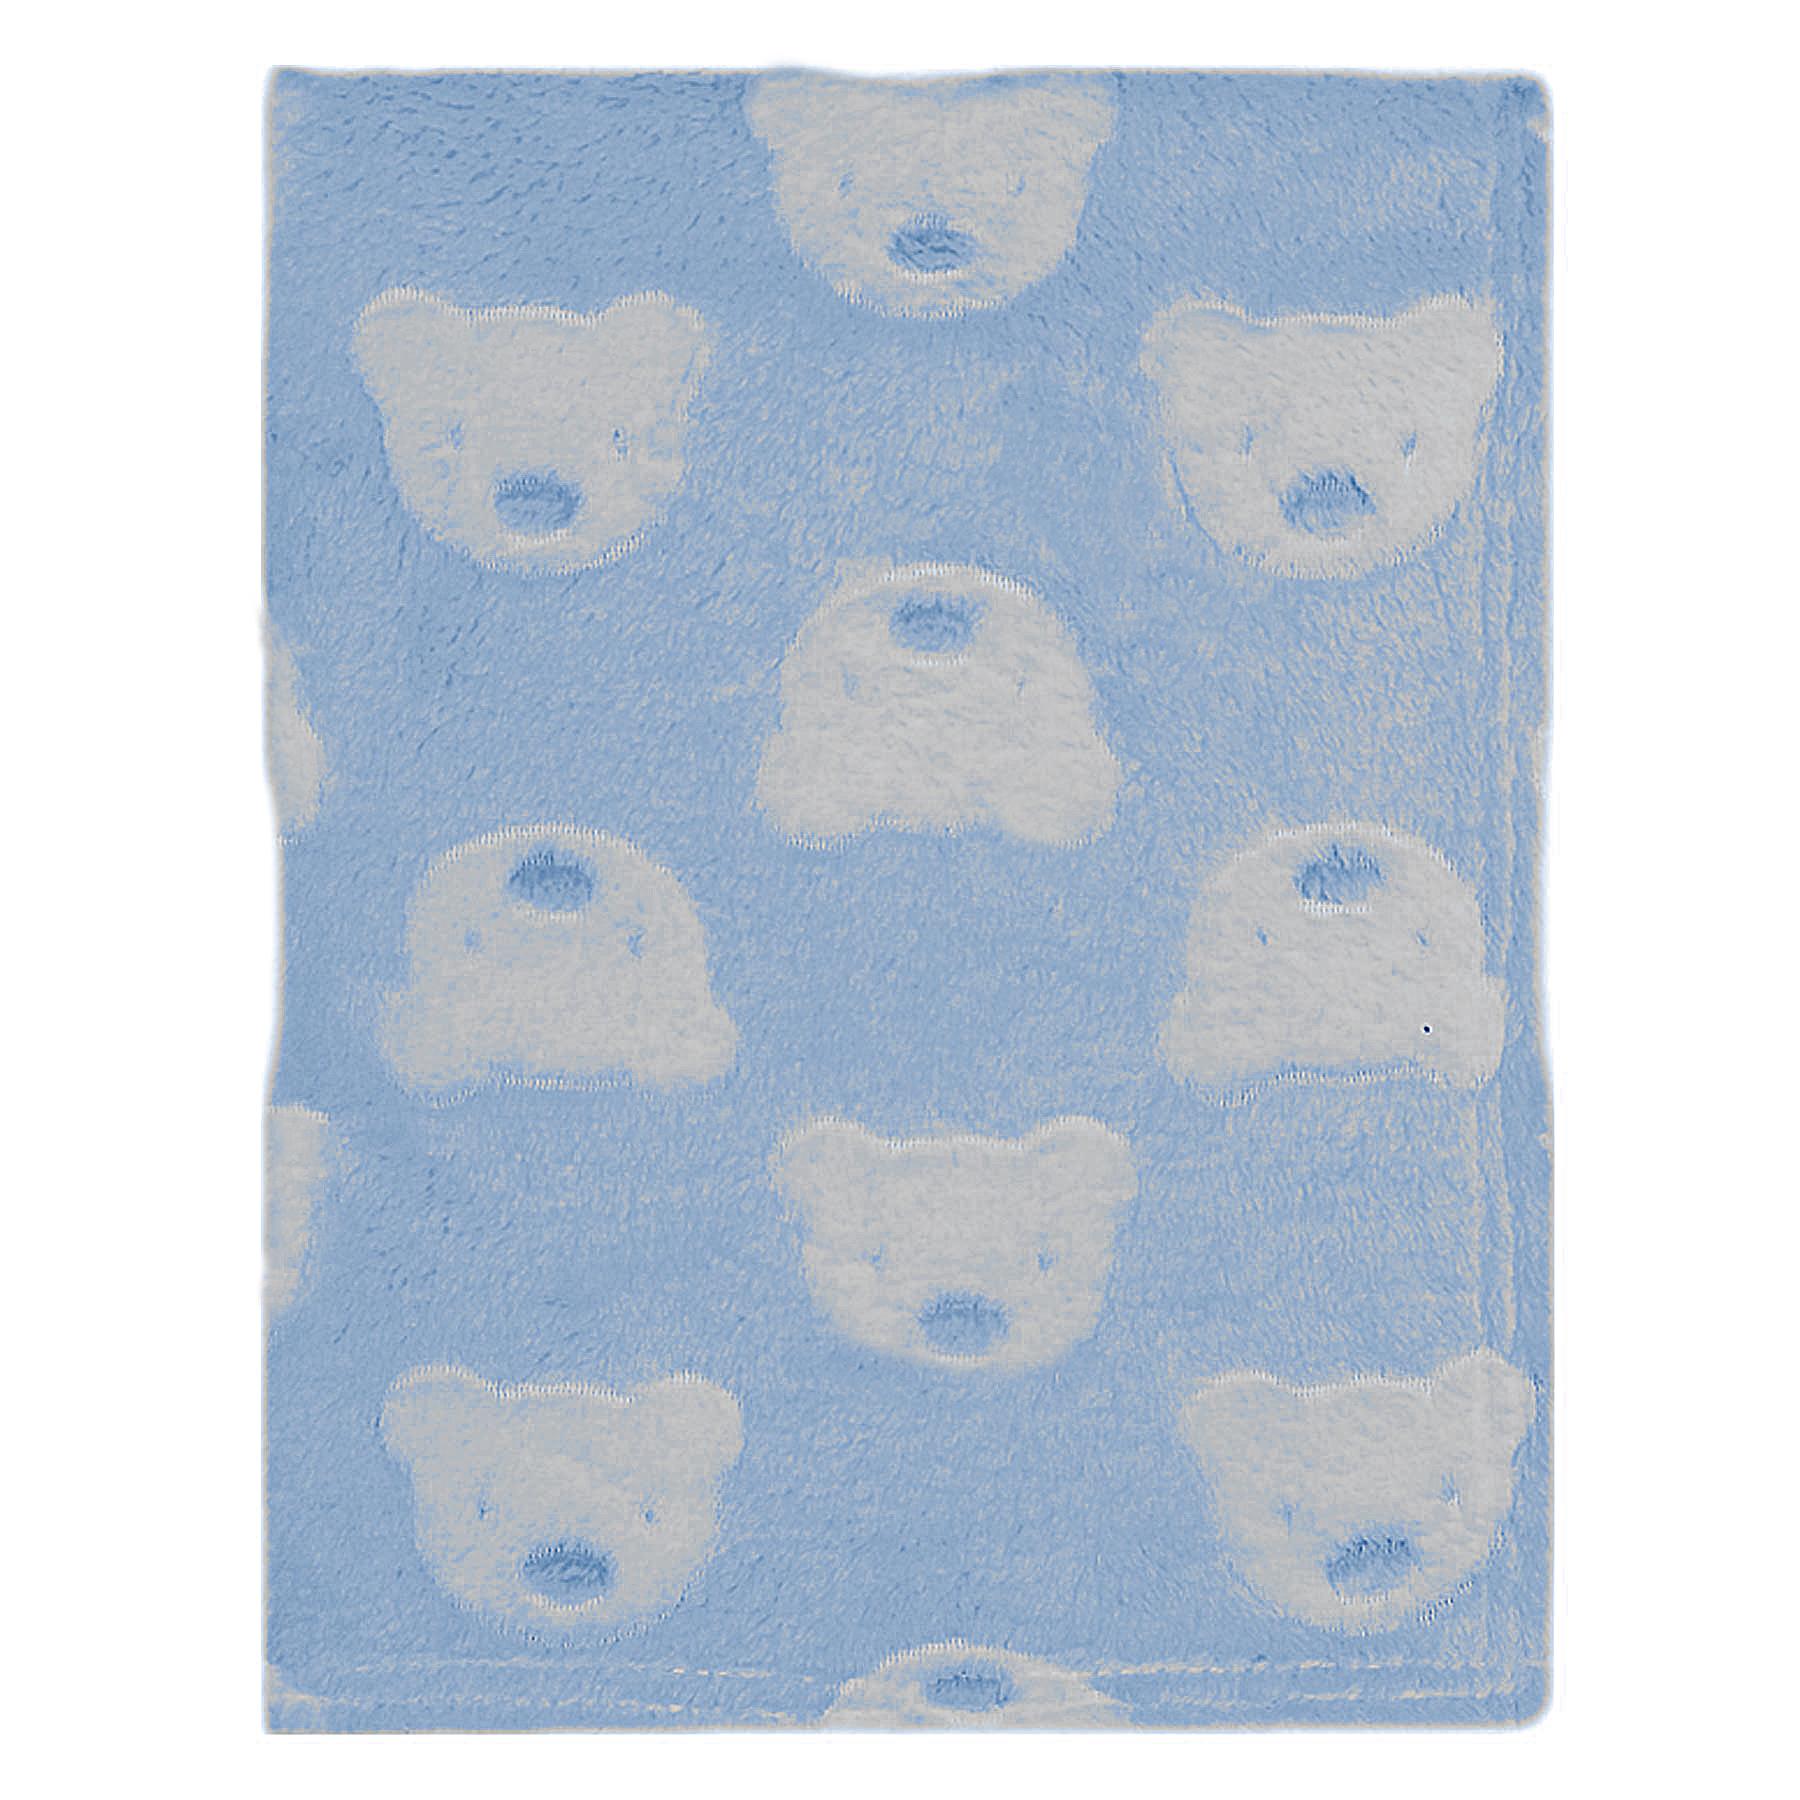 Elephant Baby Blanket Wrap Blue & White 75 X 100 CM Soft Plush by Snuggle Baby 